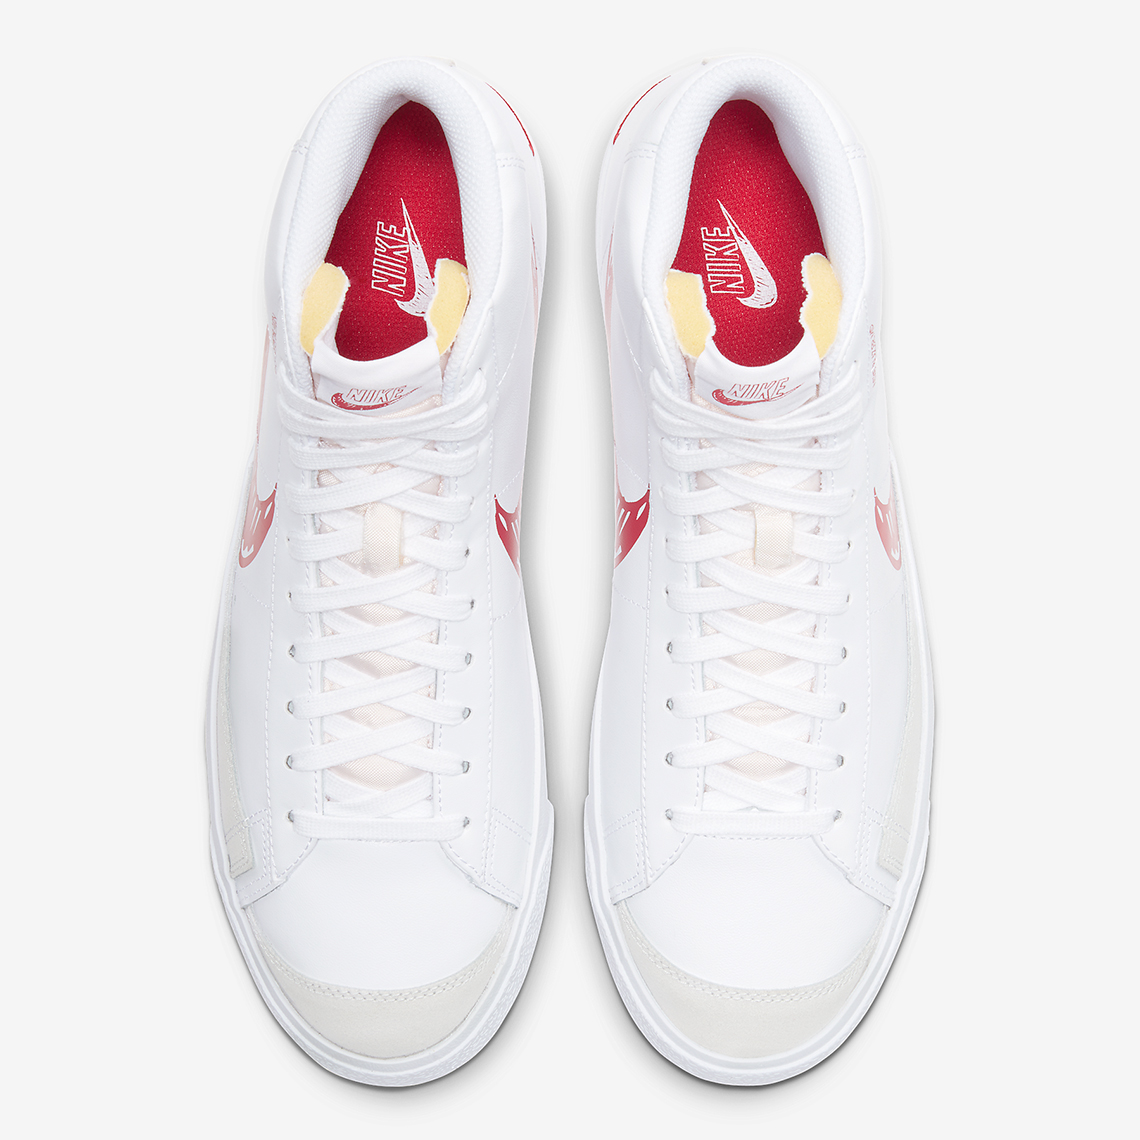 bred 11 jordan bottom of shoe White Red Scribble Cw7580 100 3